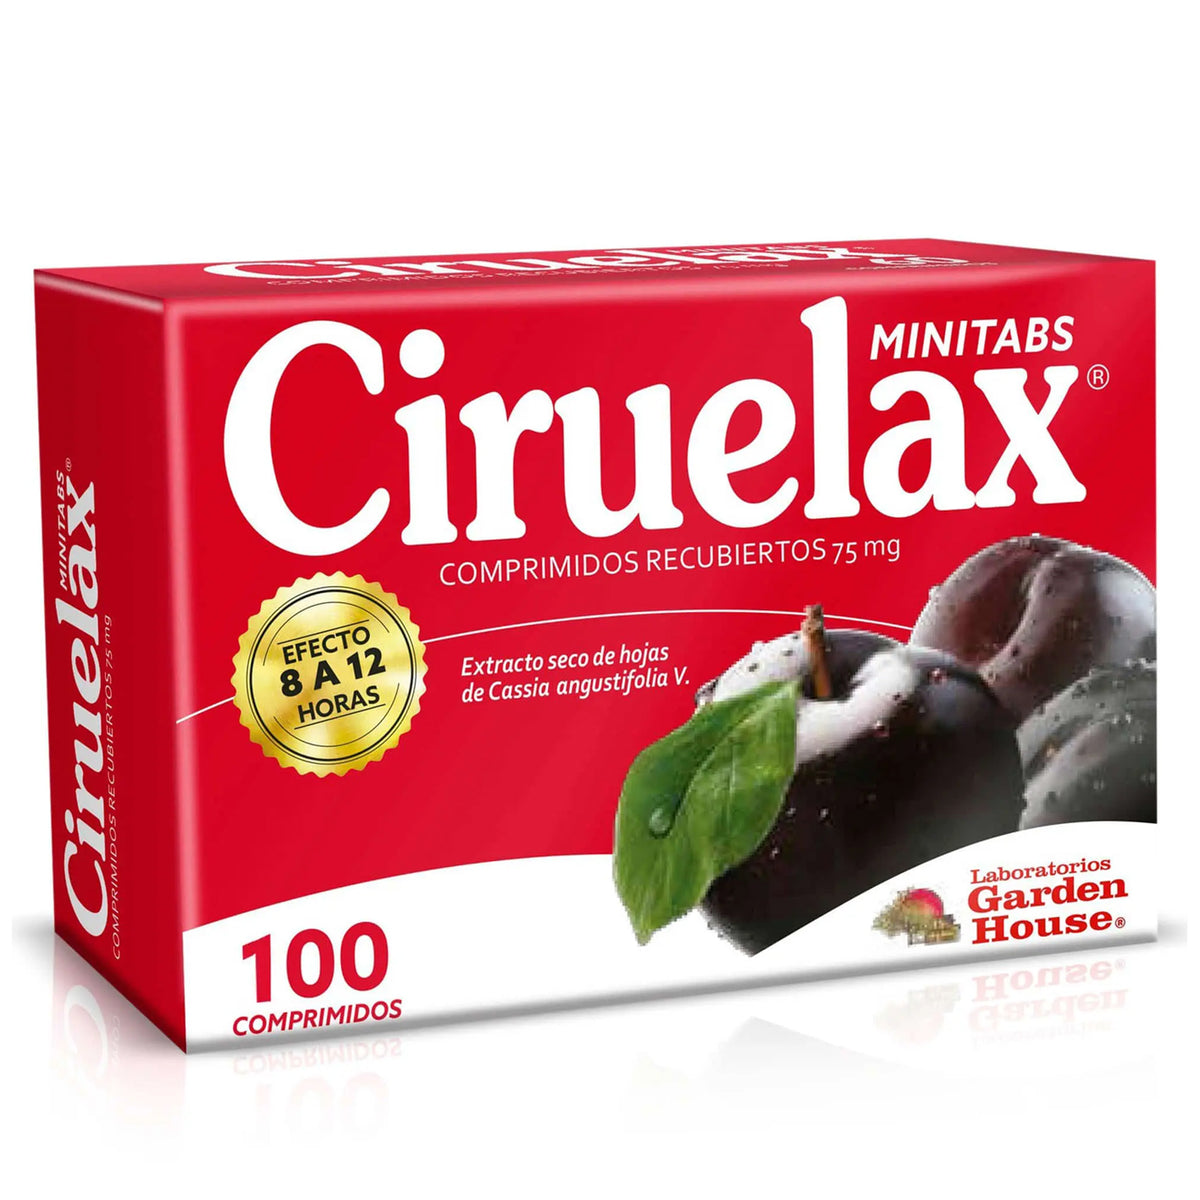 Ciruelax Minitabs